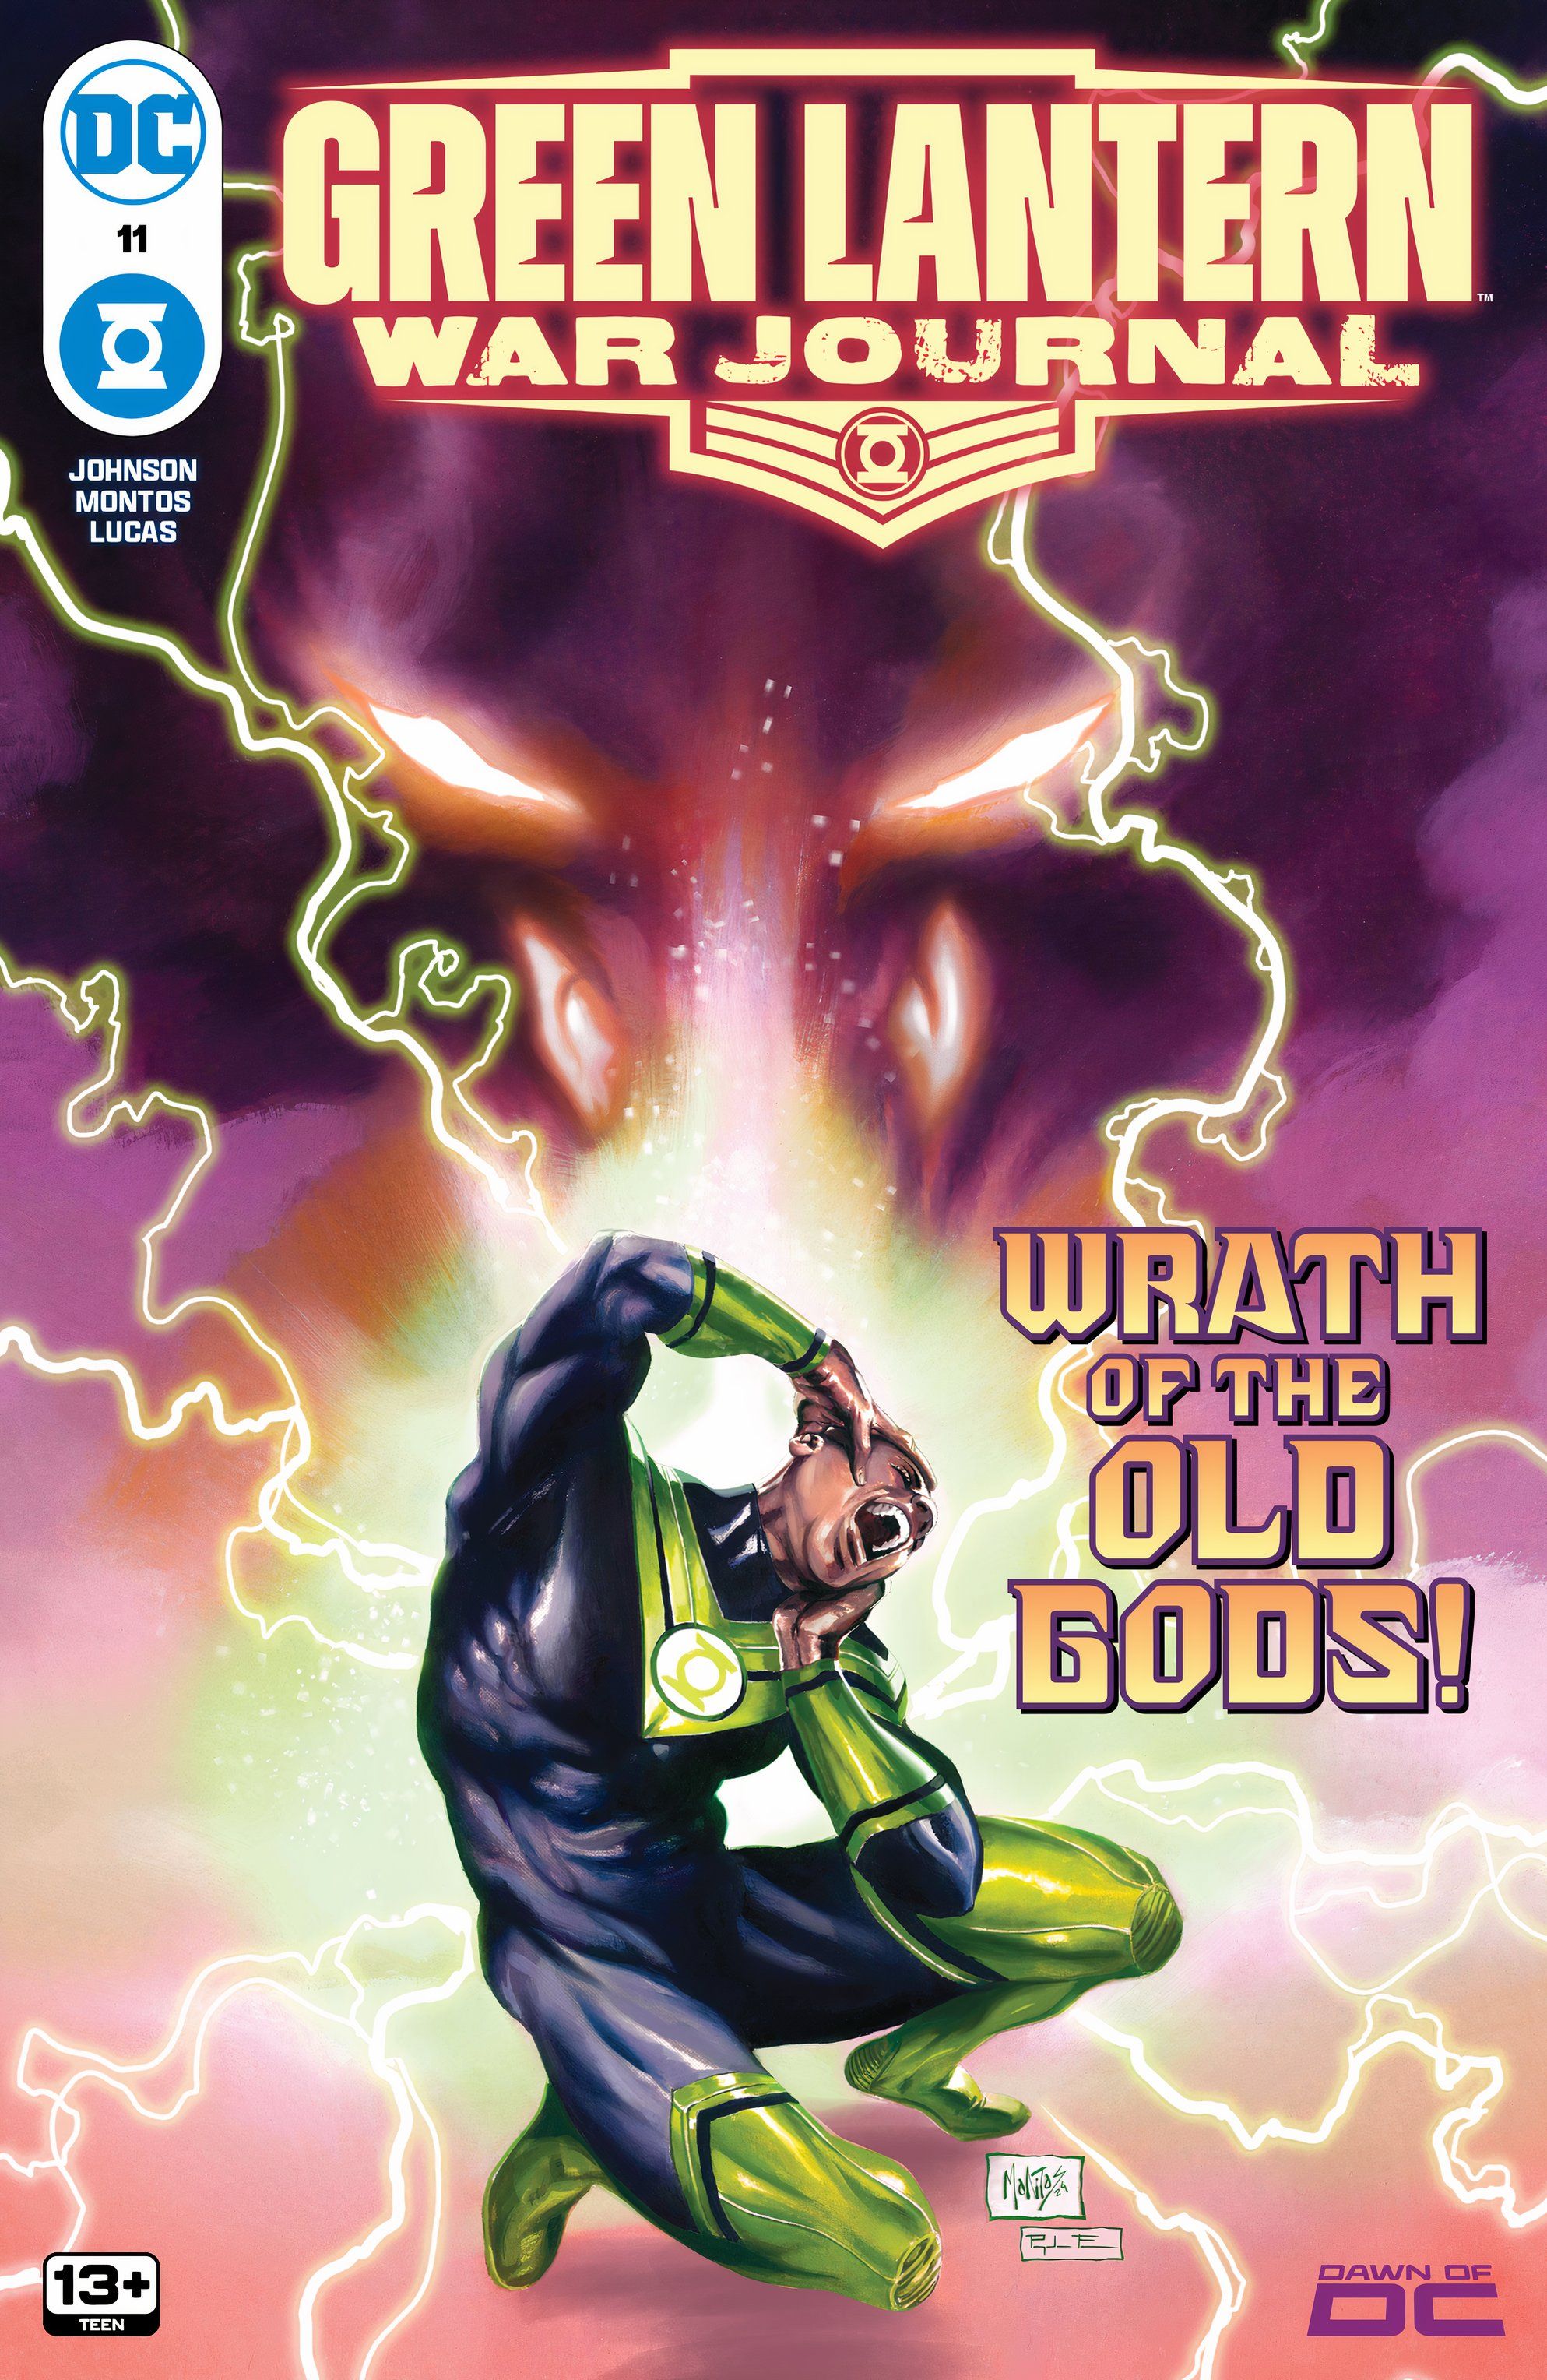 Capa do Diário de Guerra do Lanterna Verde 11 John in Pain DC